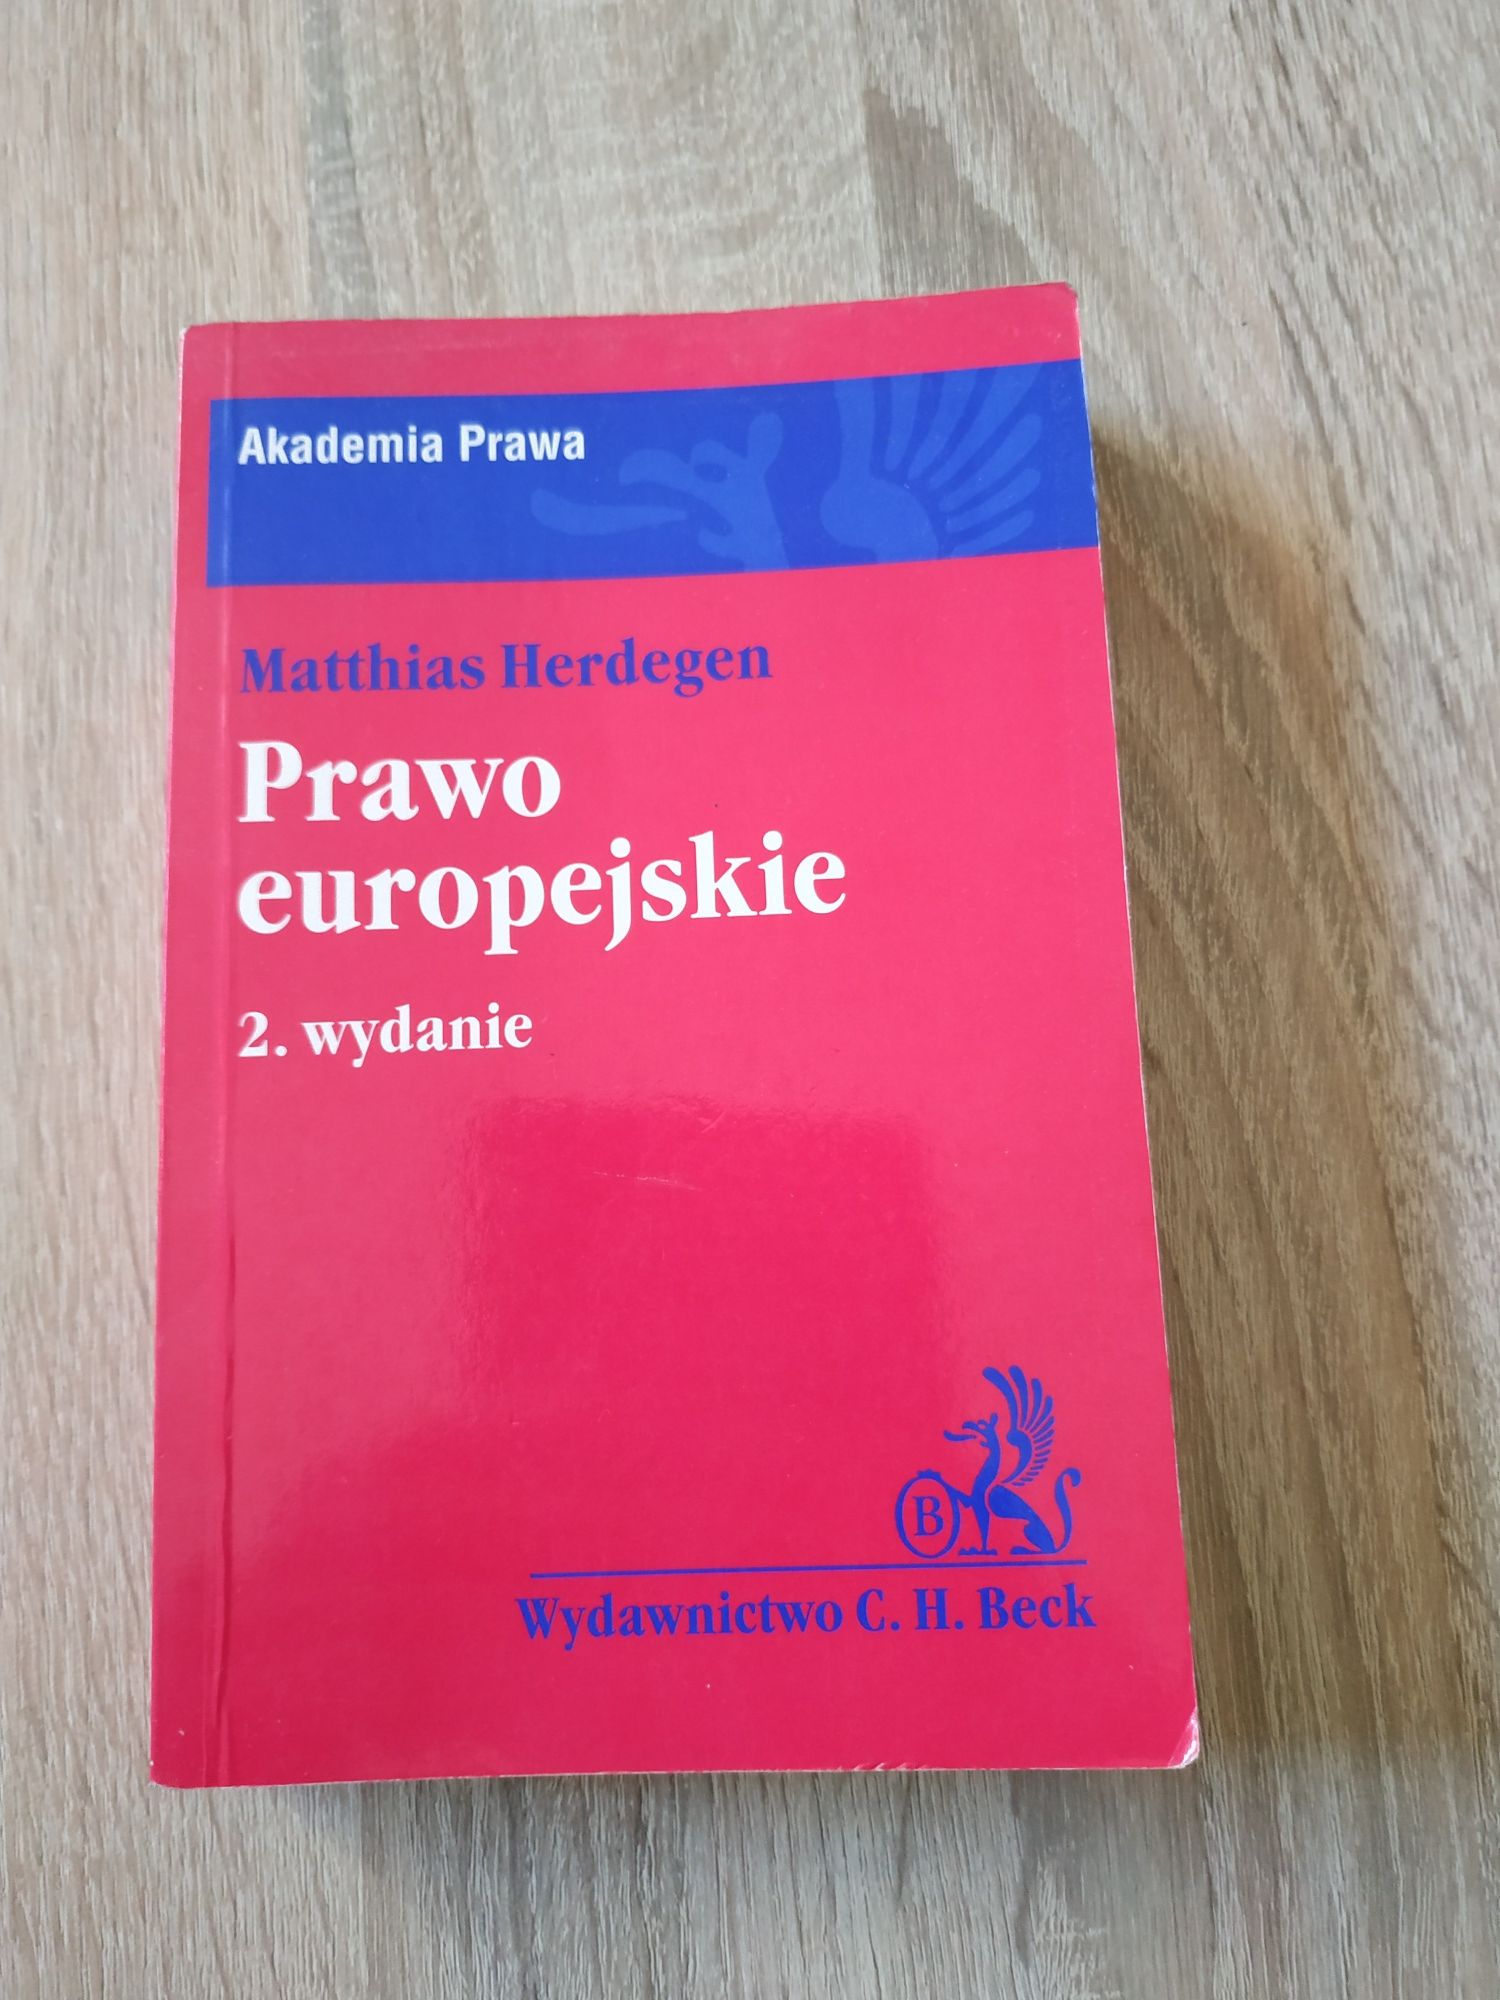 Prawo europejskie 2 wydanie, Matthias Herdegen, c.h. beck